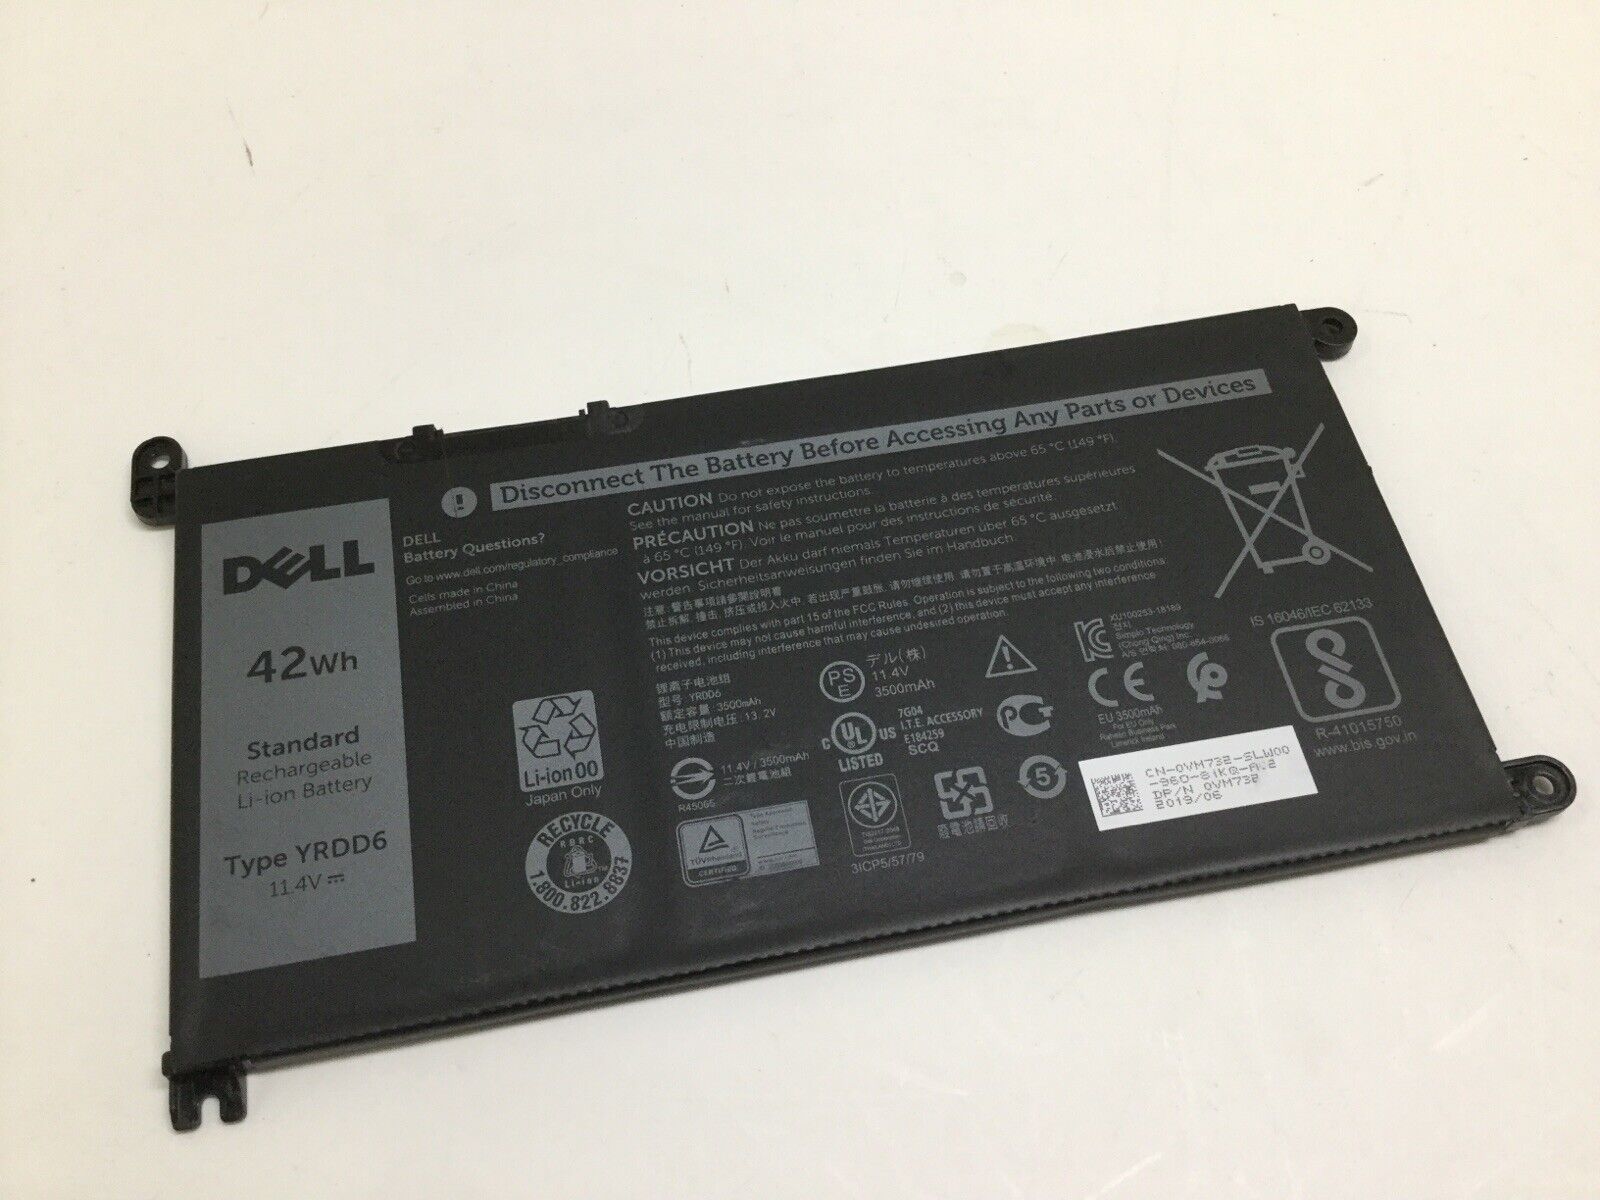 Genuine Dell Inspiron 3583 11.4V 42Wh 3500mAh Laptop Battery YRDD6 1VX1H